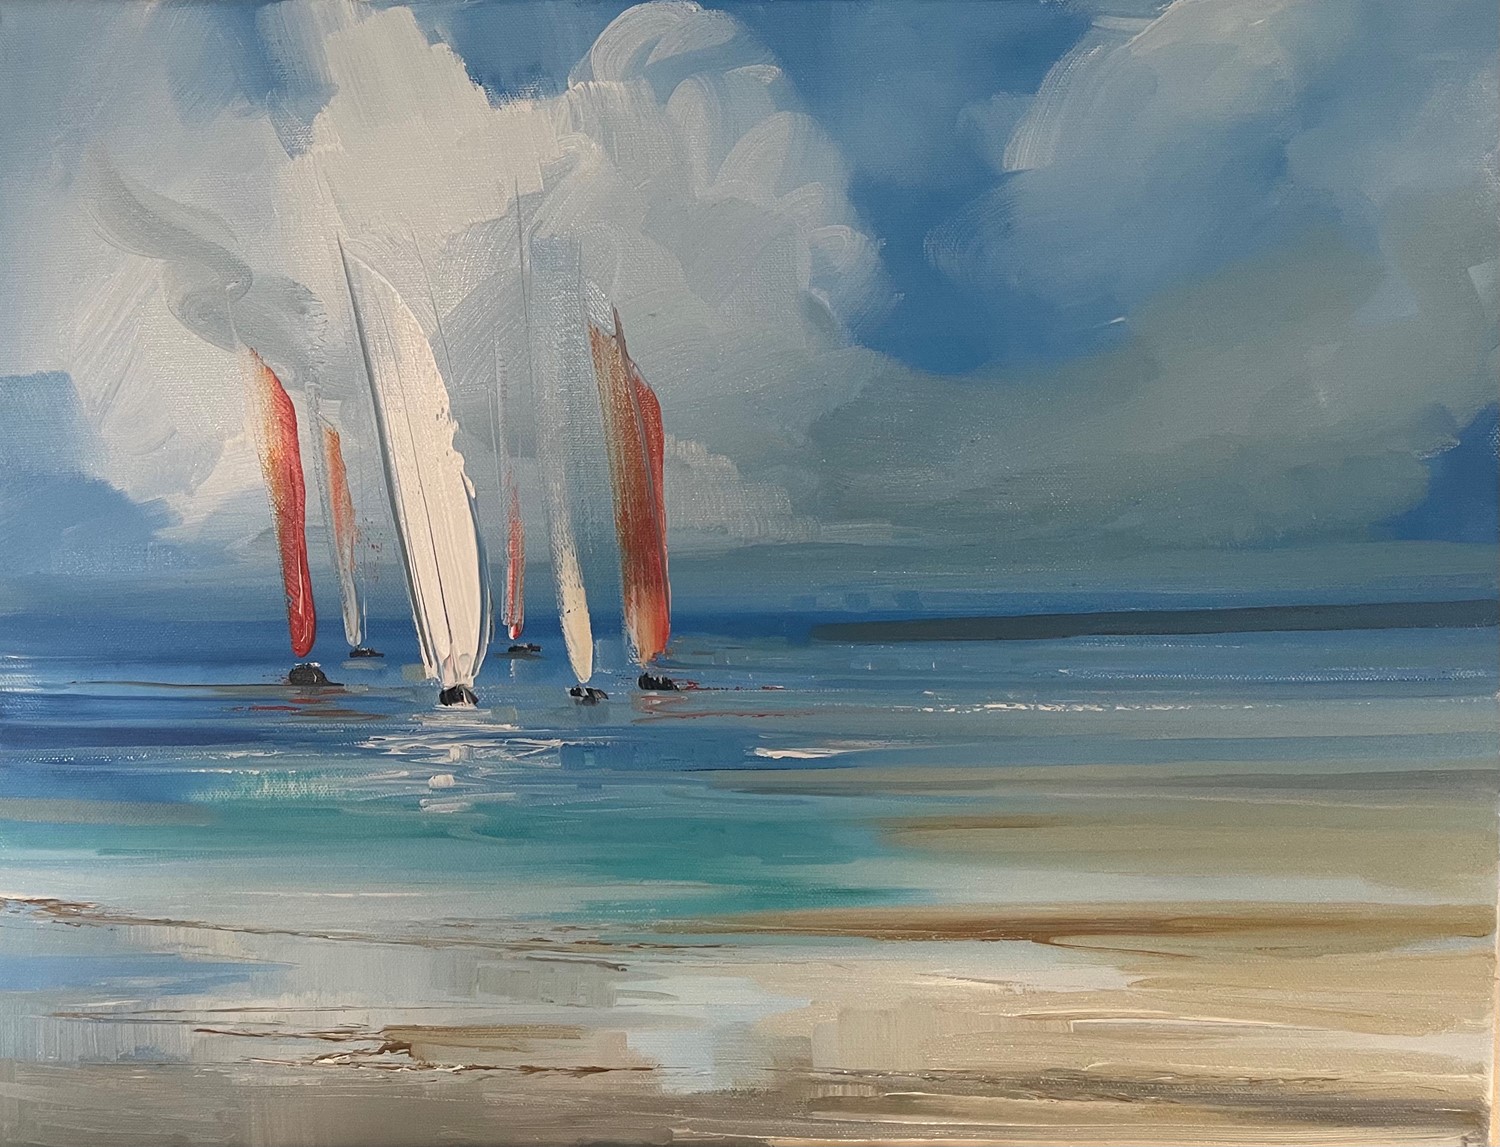 'A flash of sails' by artist Rosanne Barr